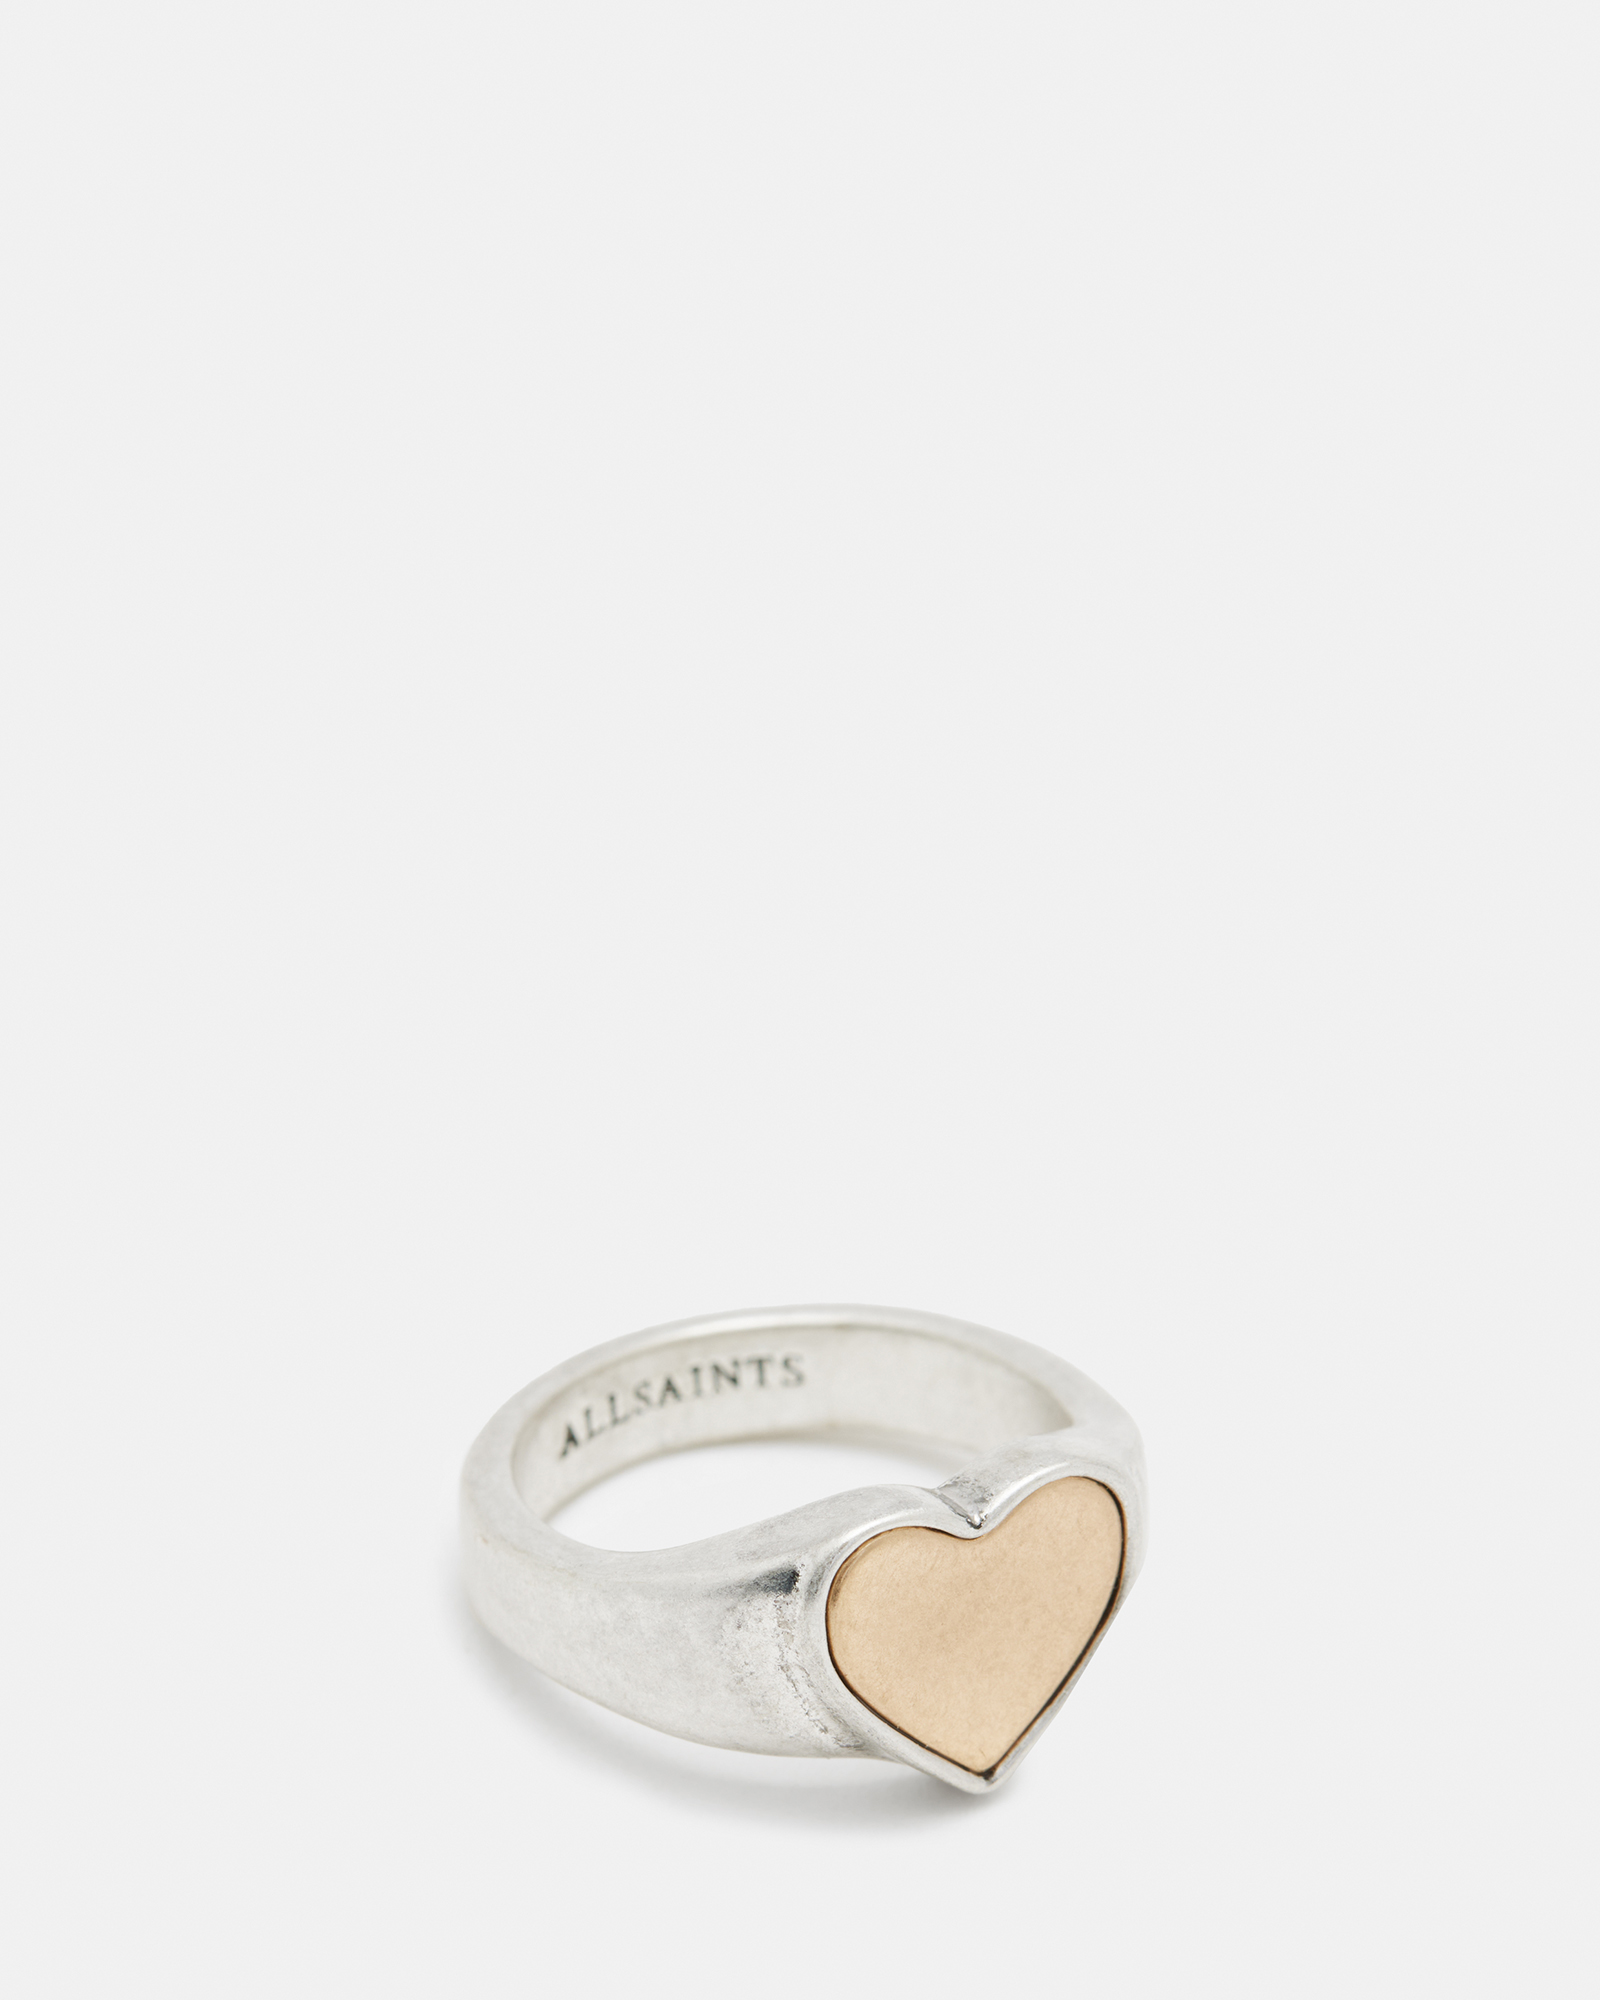 Allsaints Obi Two Tone Heart Shaped Ring In Metallic